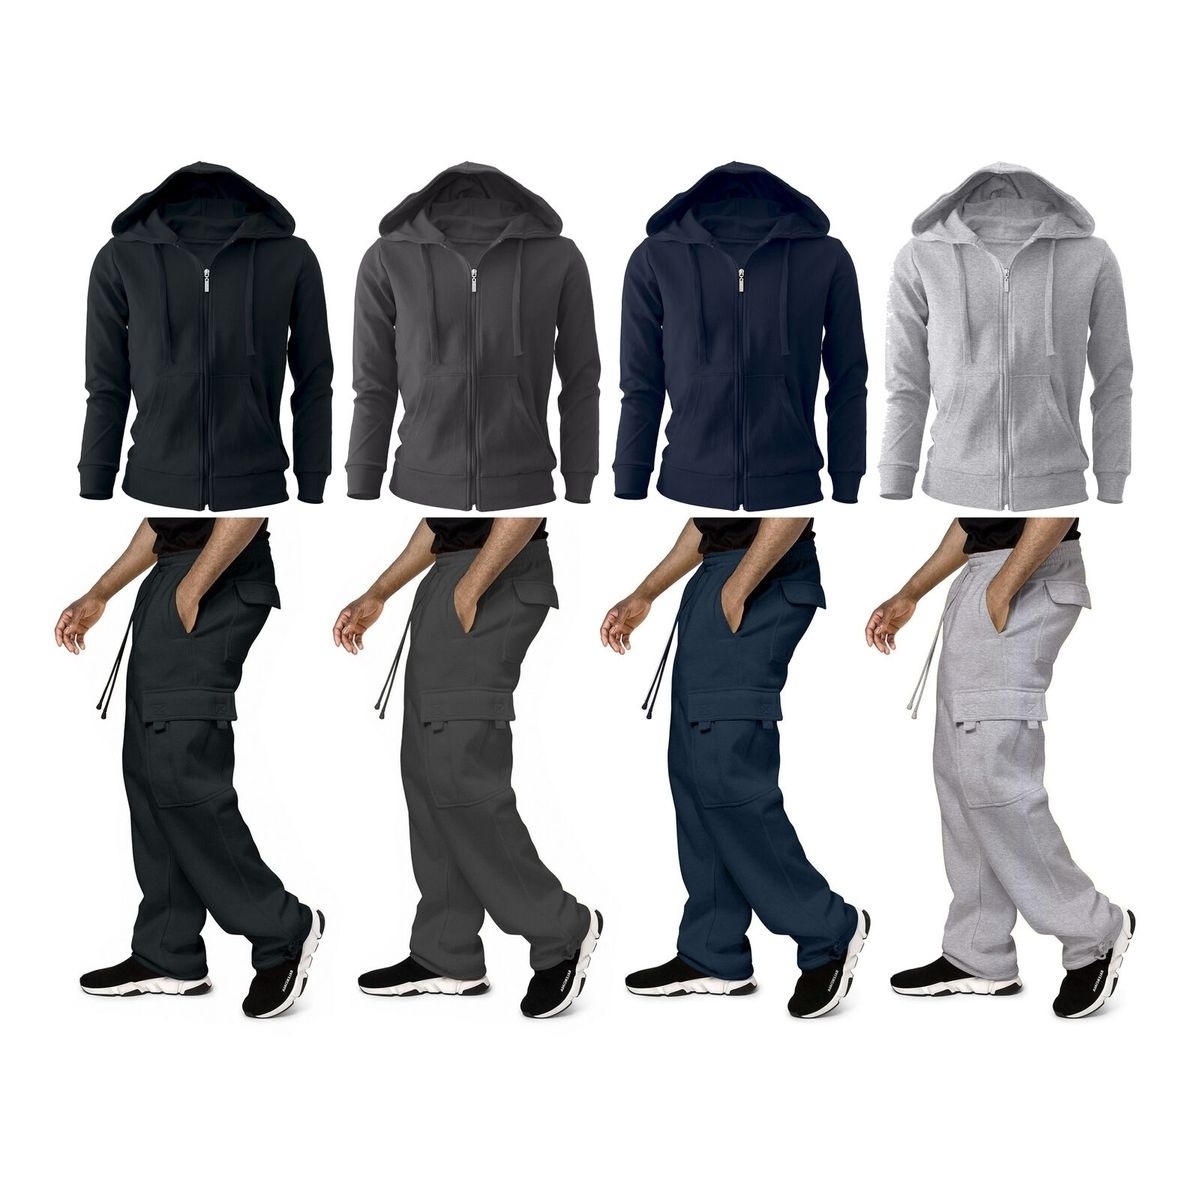 2-Pack: Men's Big & Tall Winter Warm Athletic Active Cozy Fleece Lined Multi-Pocket Full Zip Up Cargo Tracksuit - Navy, Medium